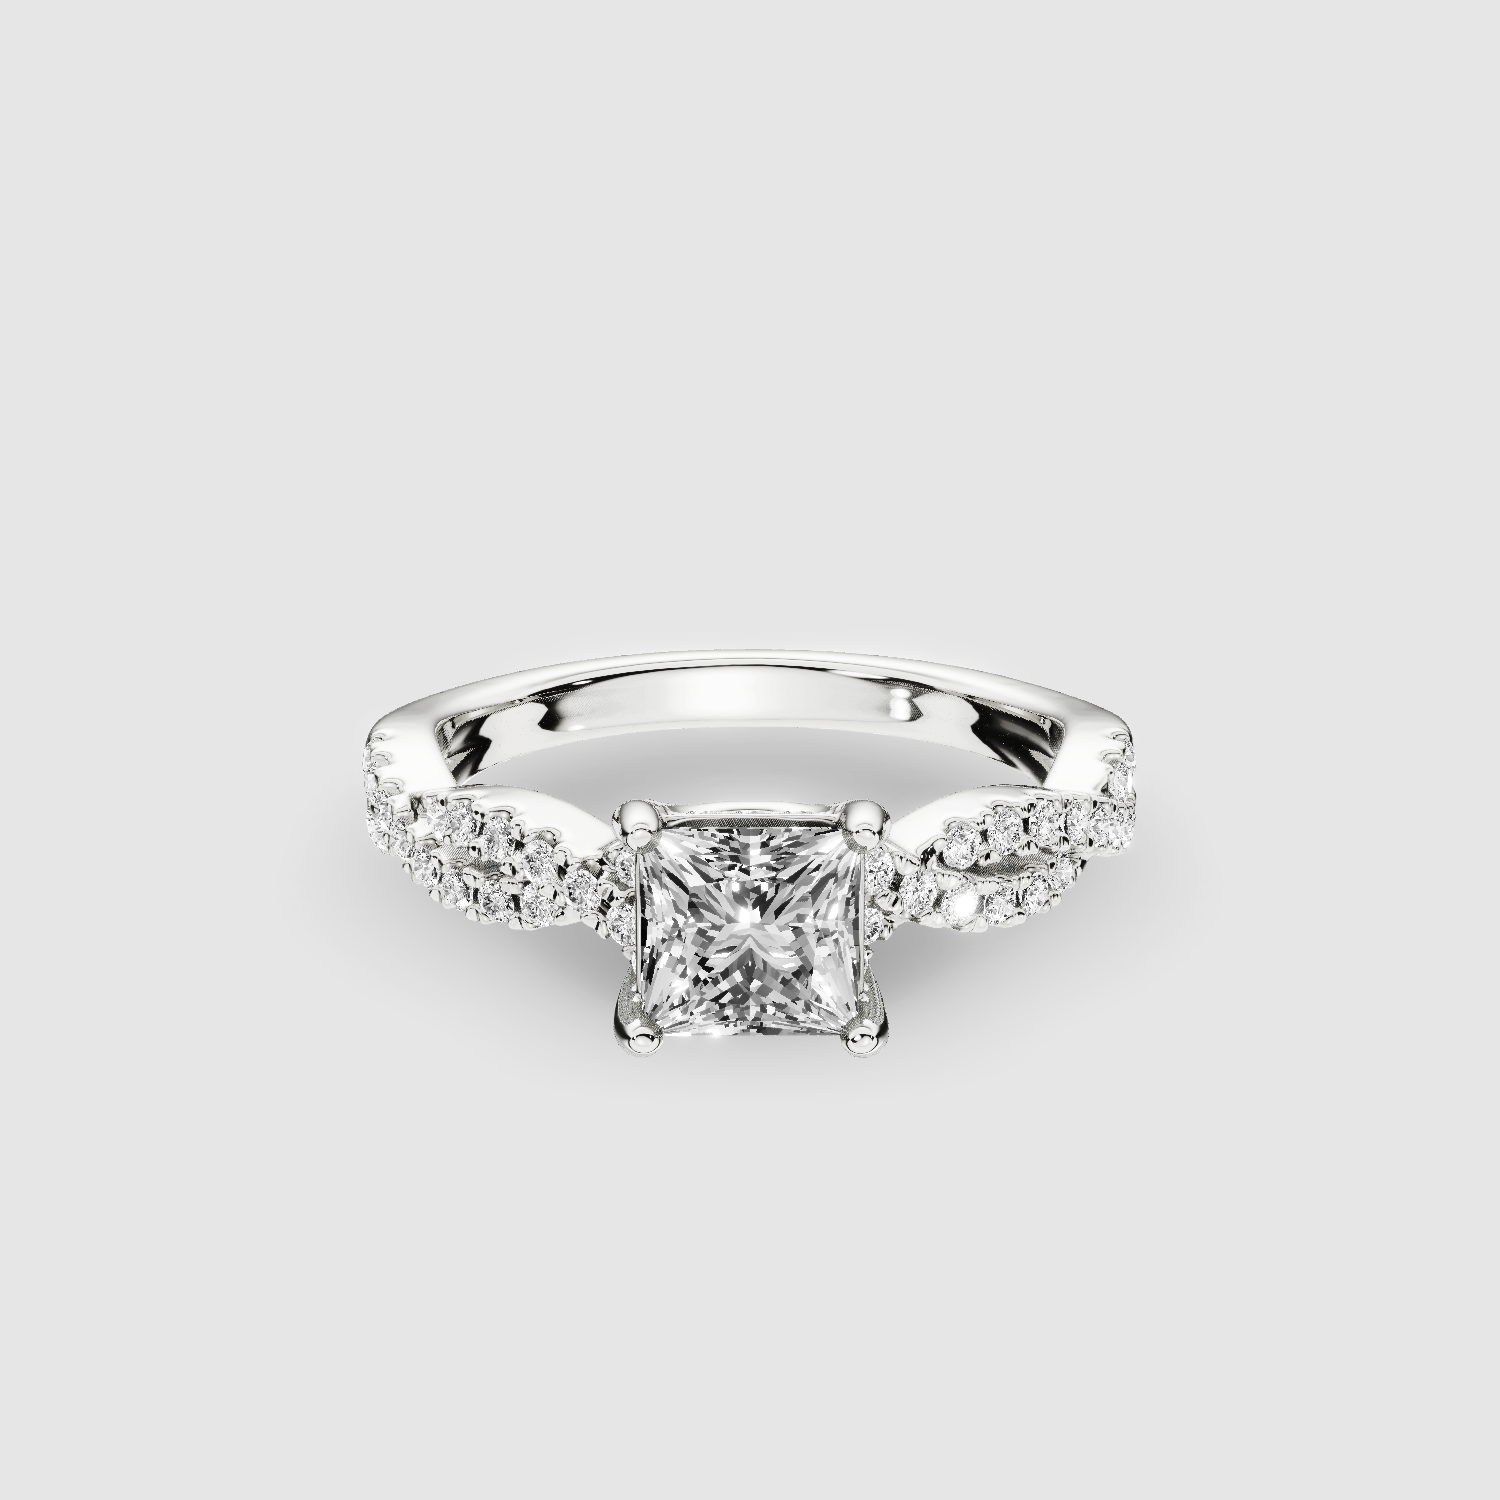 Buy Half Carat Diamond Ring, Trillion Diamond Ring, Triangle Shape Diamond  Engagement Ring White Gold, 0.5ct Diamond Ring Online in India - Etsy